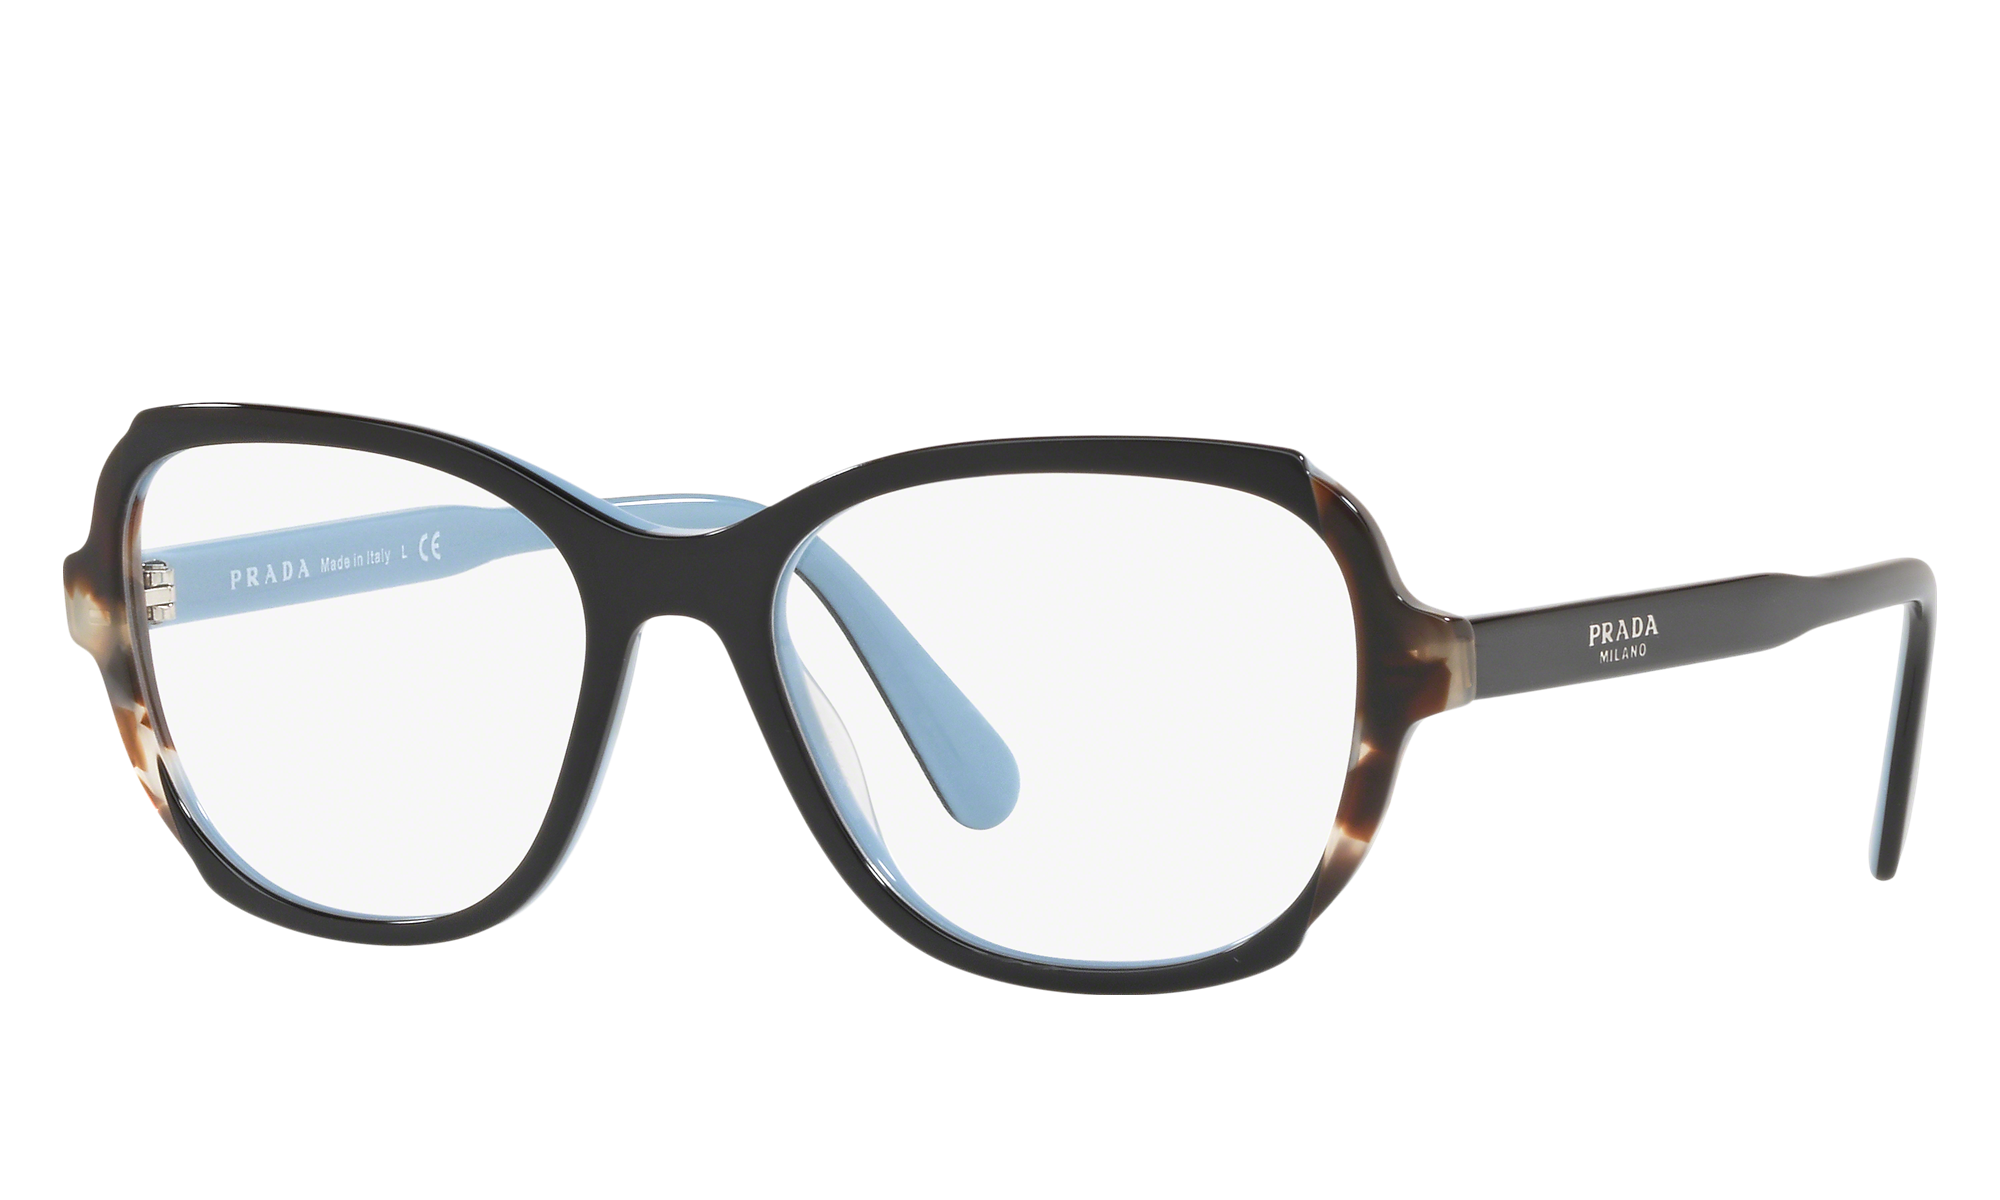 prada glasses lenscrafters